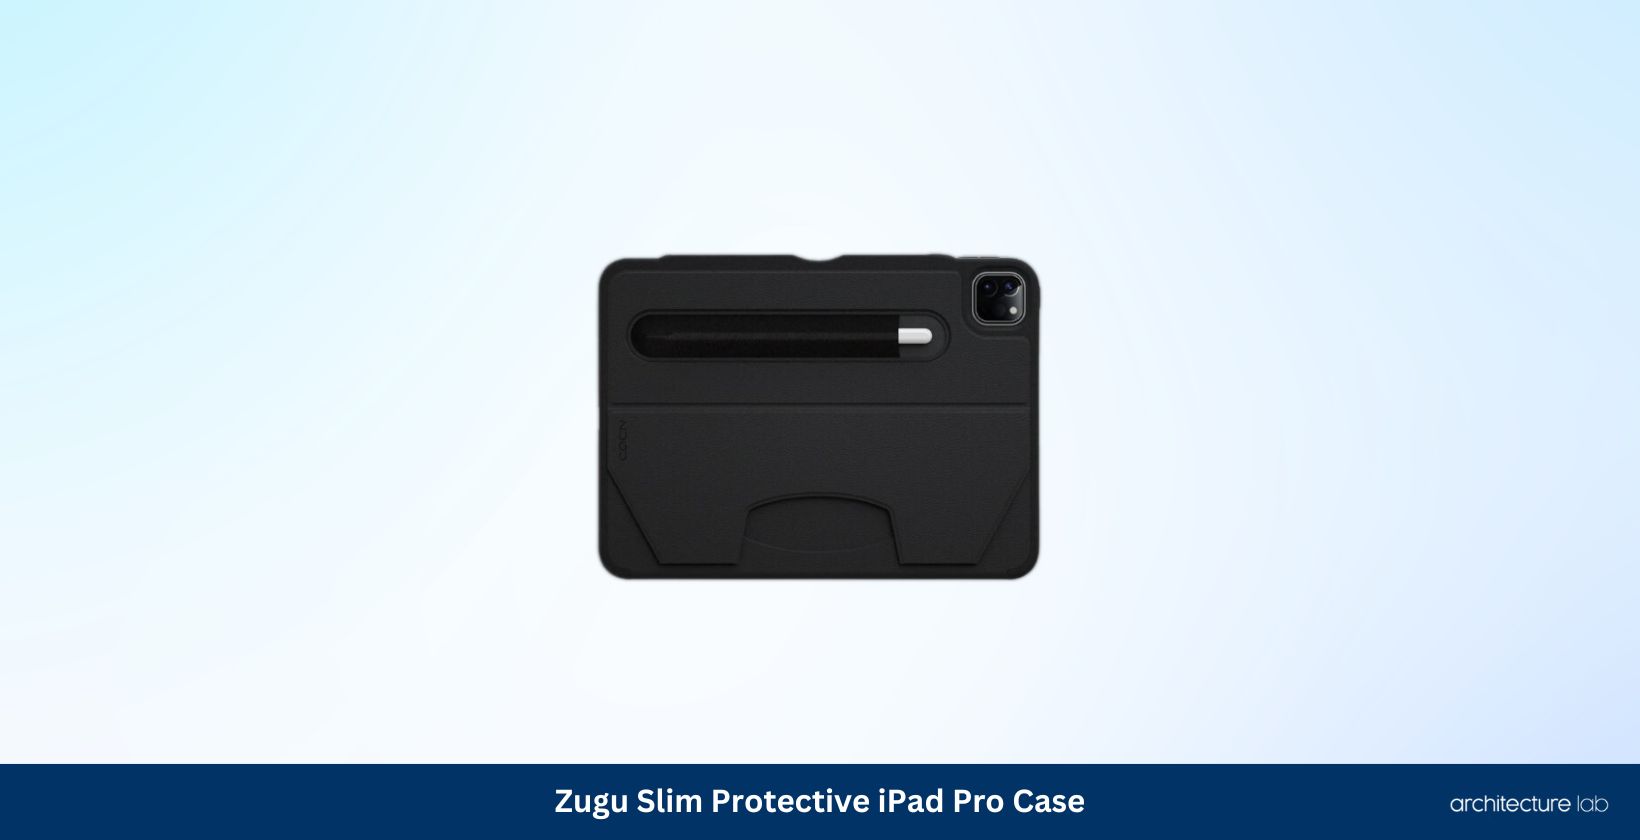 Zugu slim protective ipad pro case